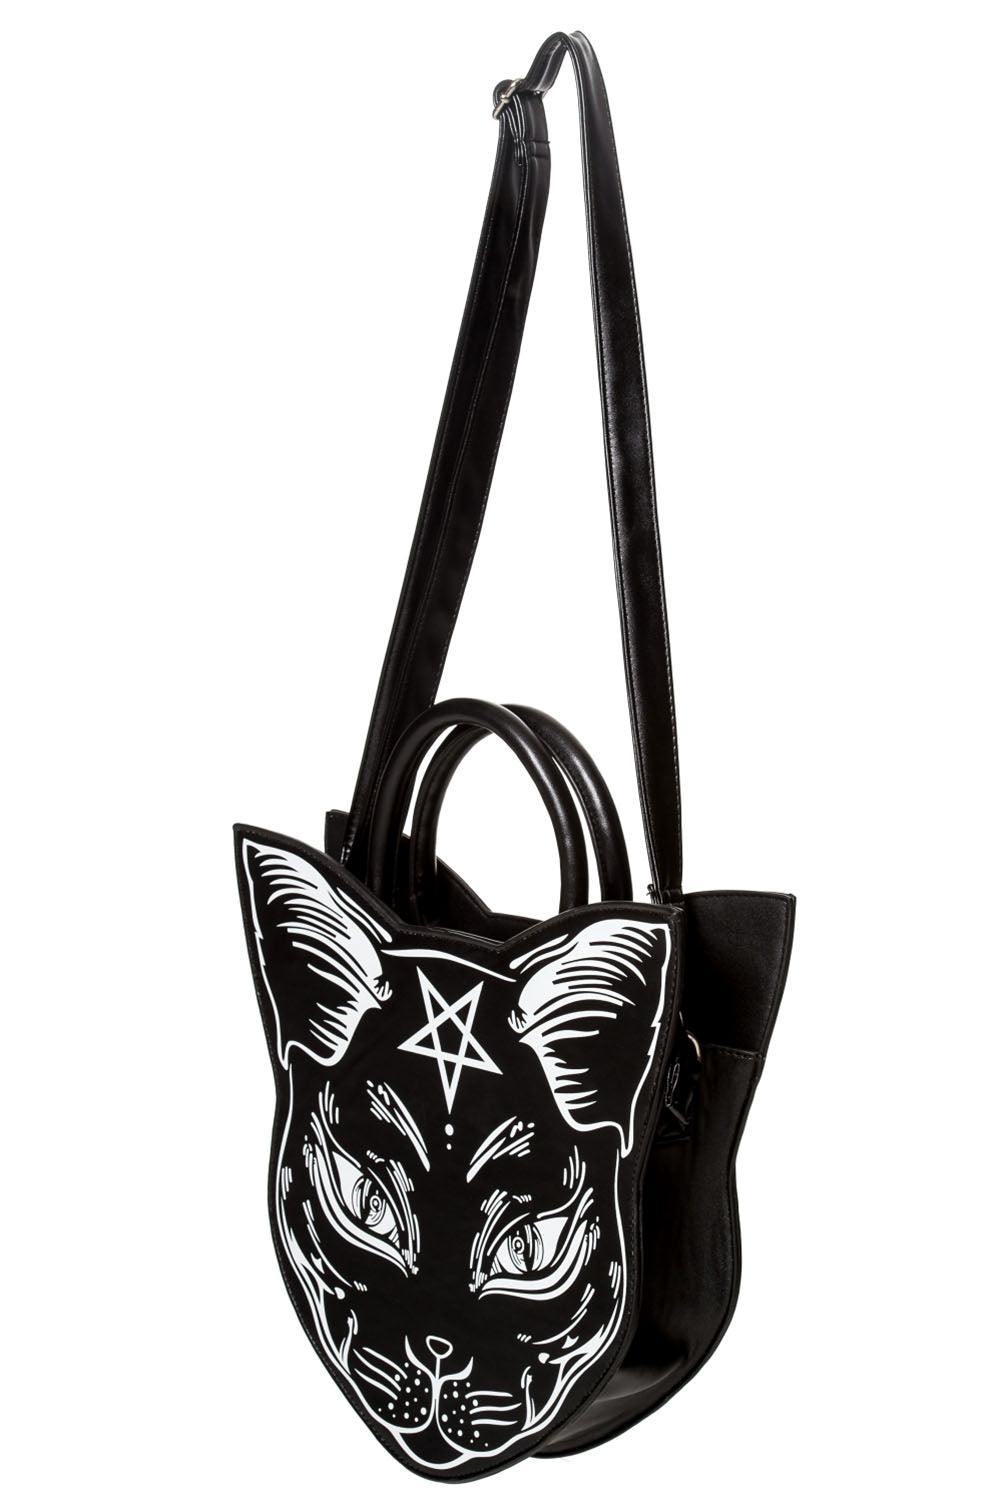 Banned Apparel Black Cat Magic Shoulder Bag - VampireFreaks